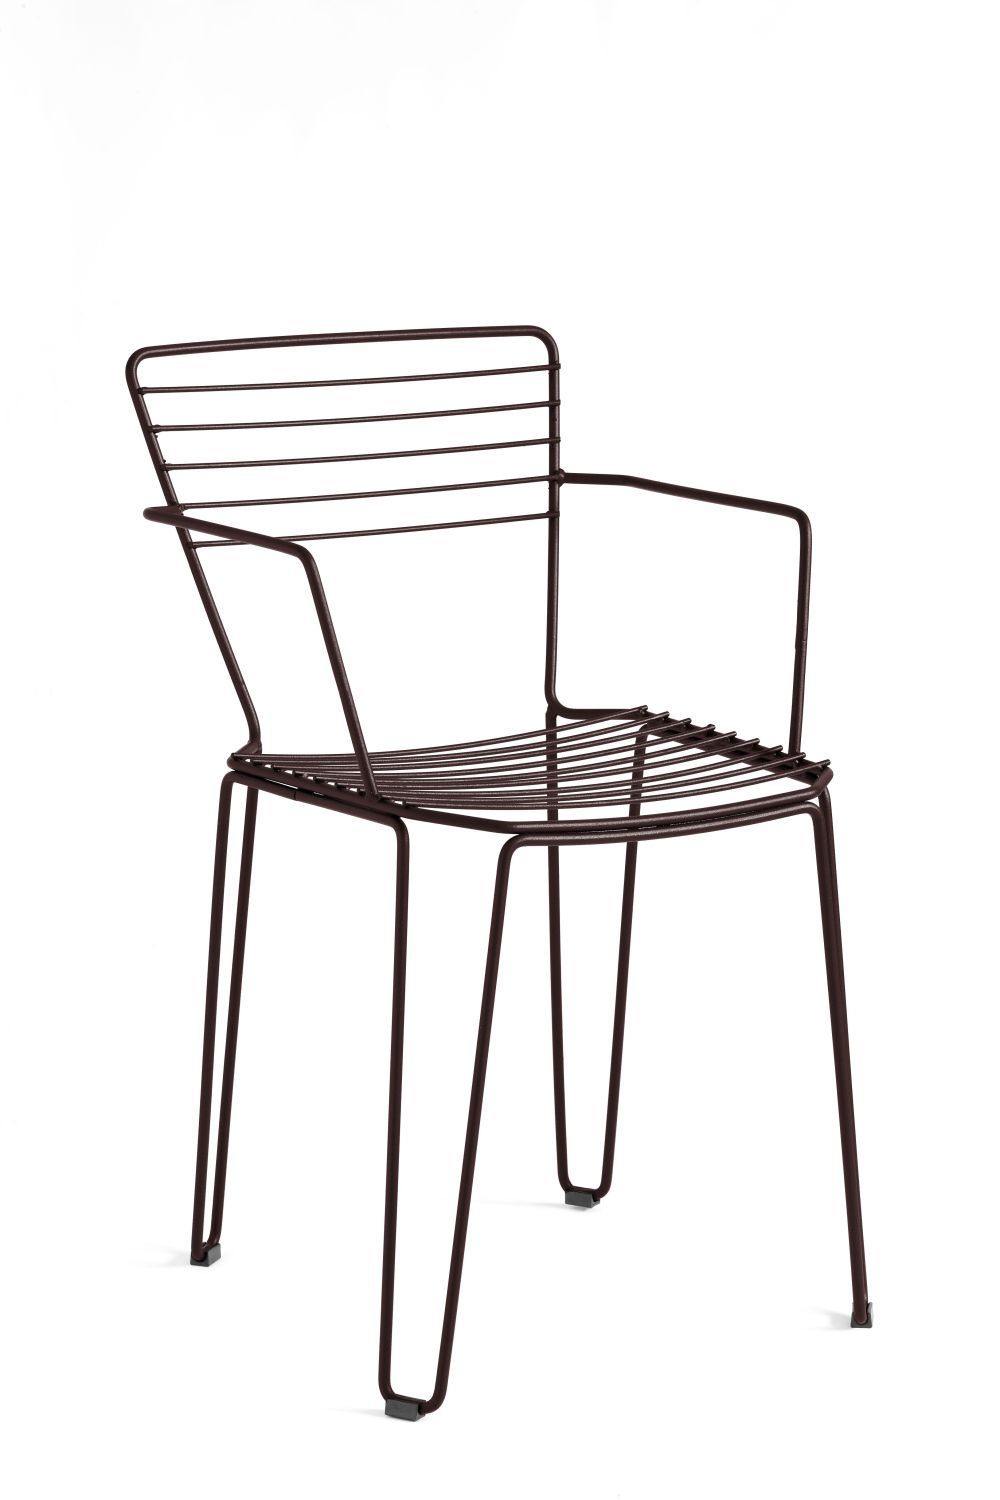 ISIMAR - Židle MENORCA s područkami - hnědá - 